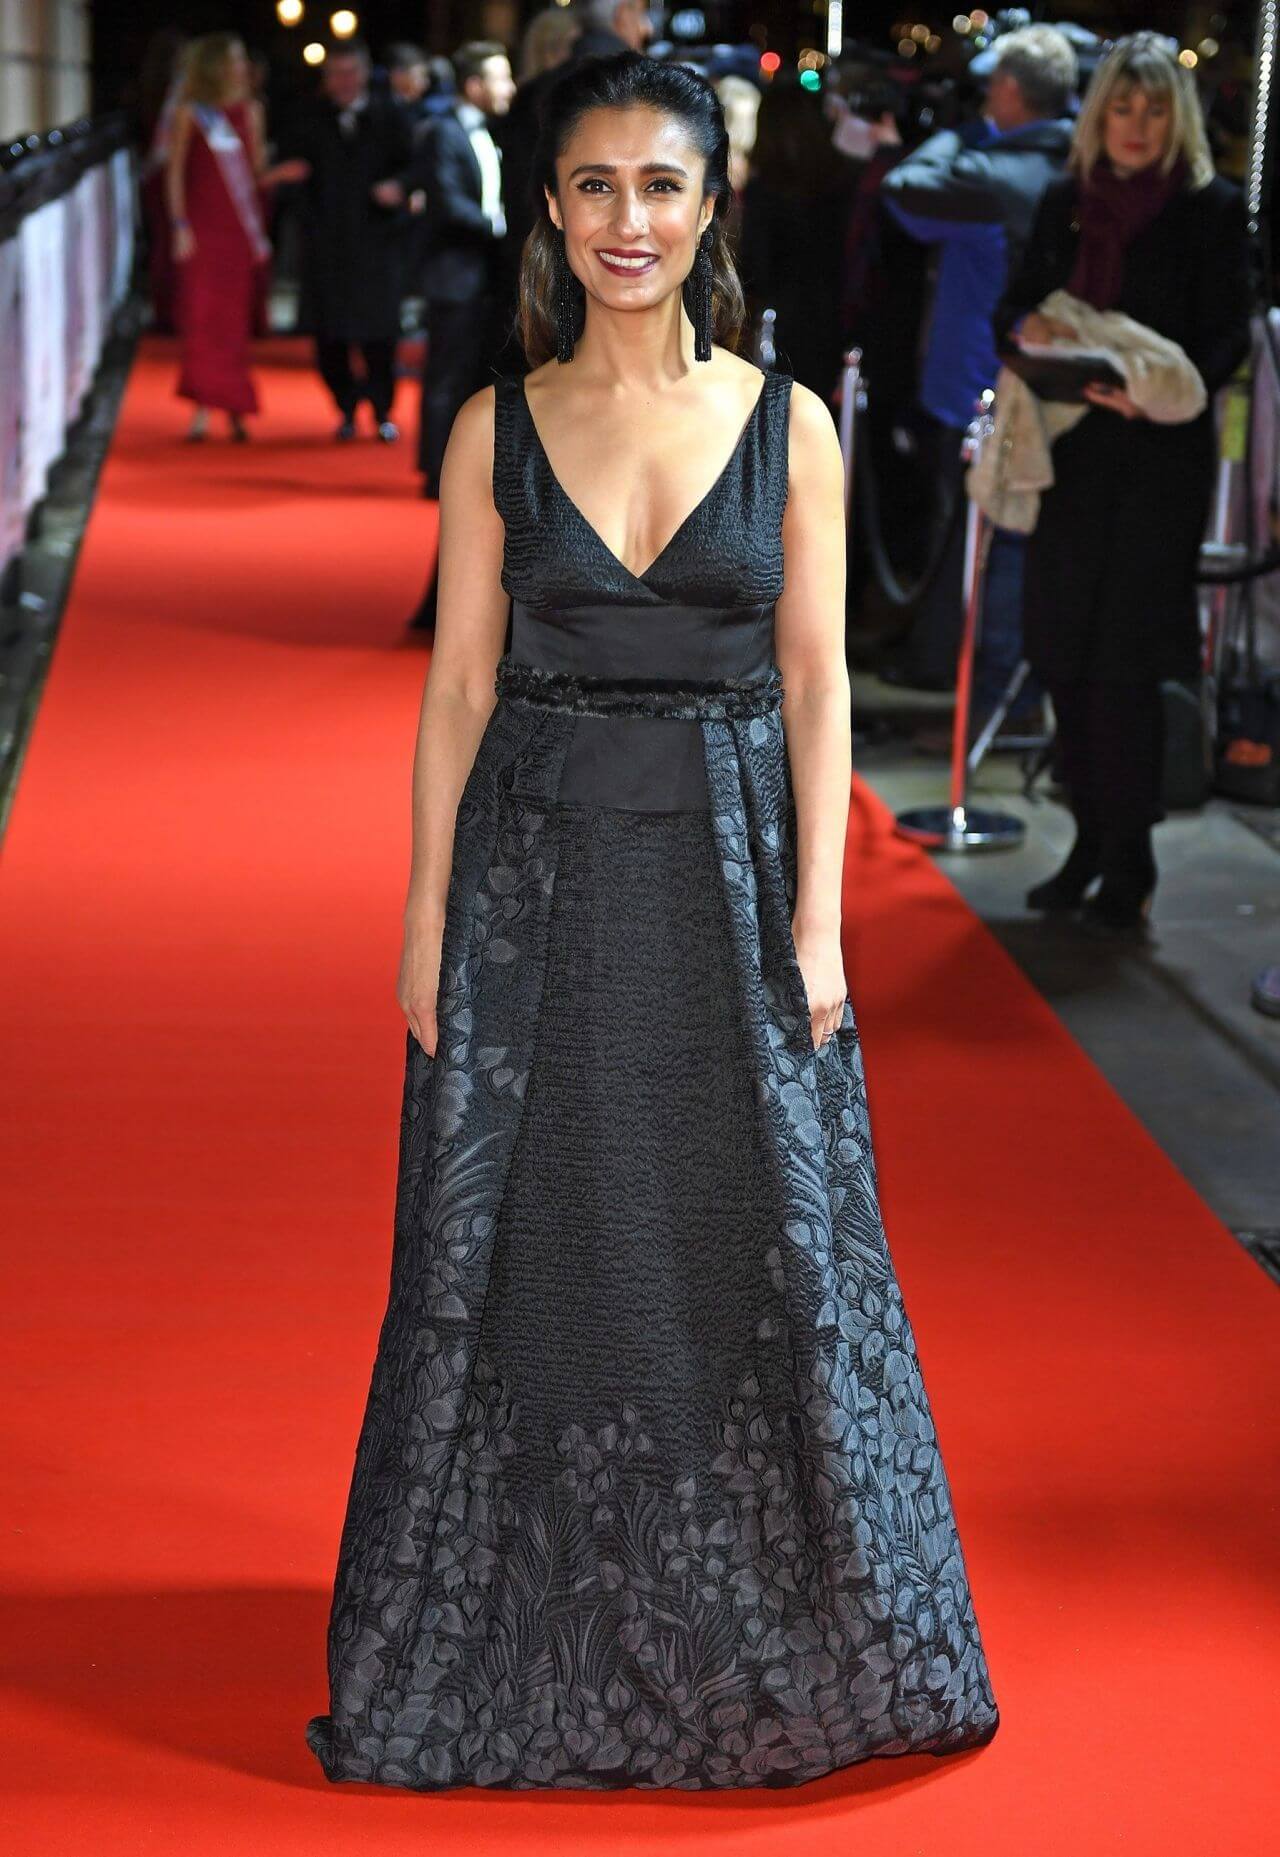 Anita Rani In Black V Neckline Sleeveless Long Flare Gown At The Sun Military Awards  in London